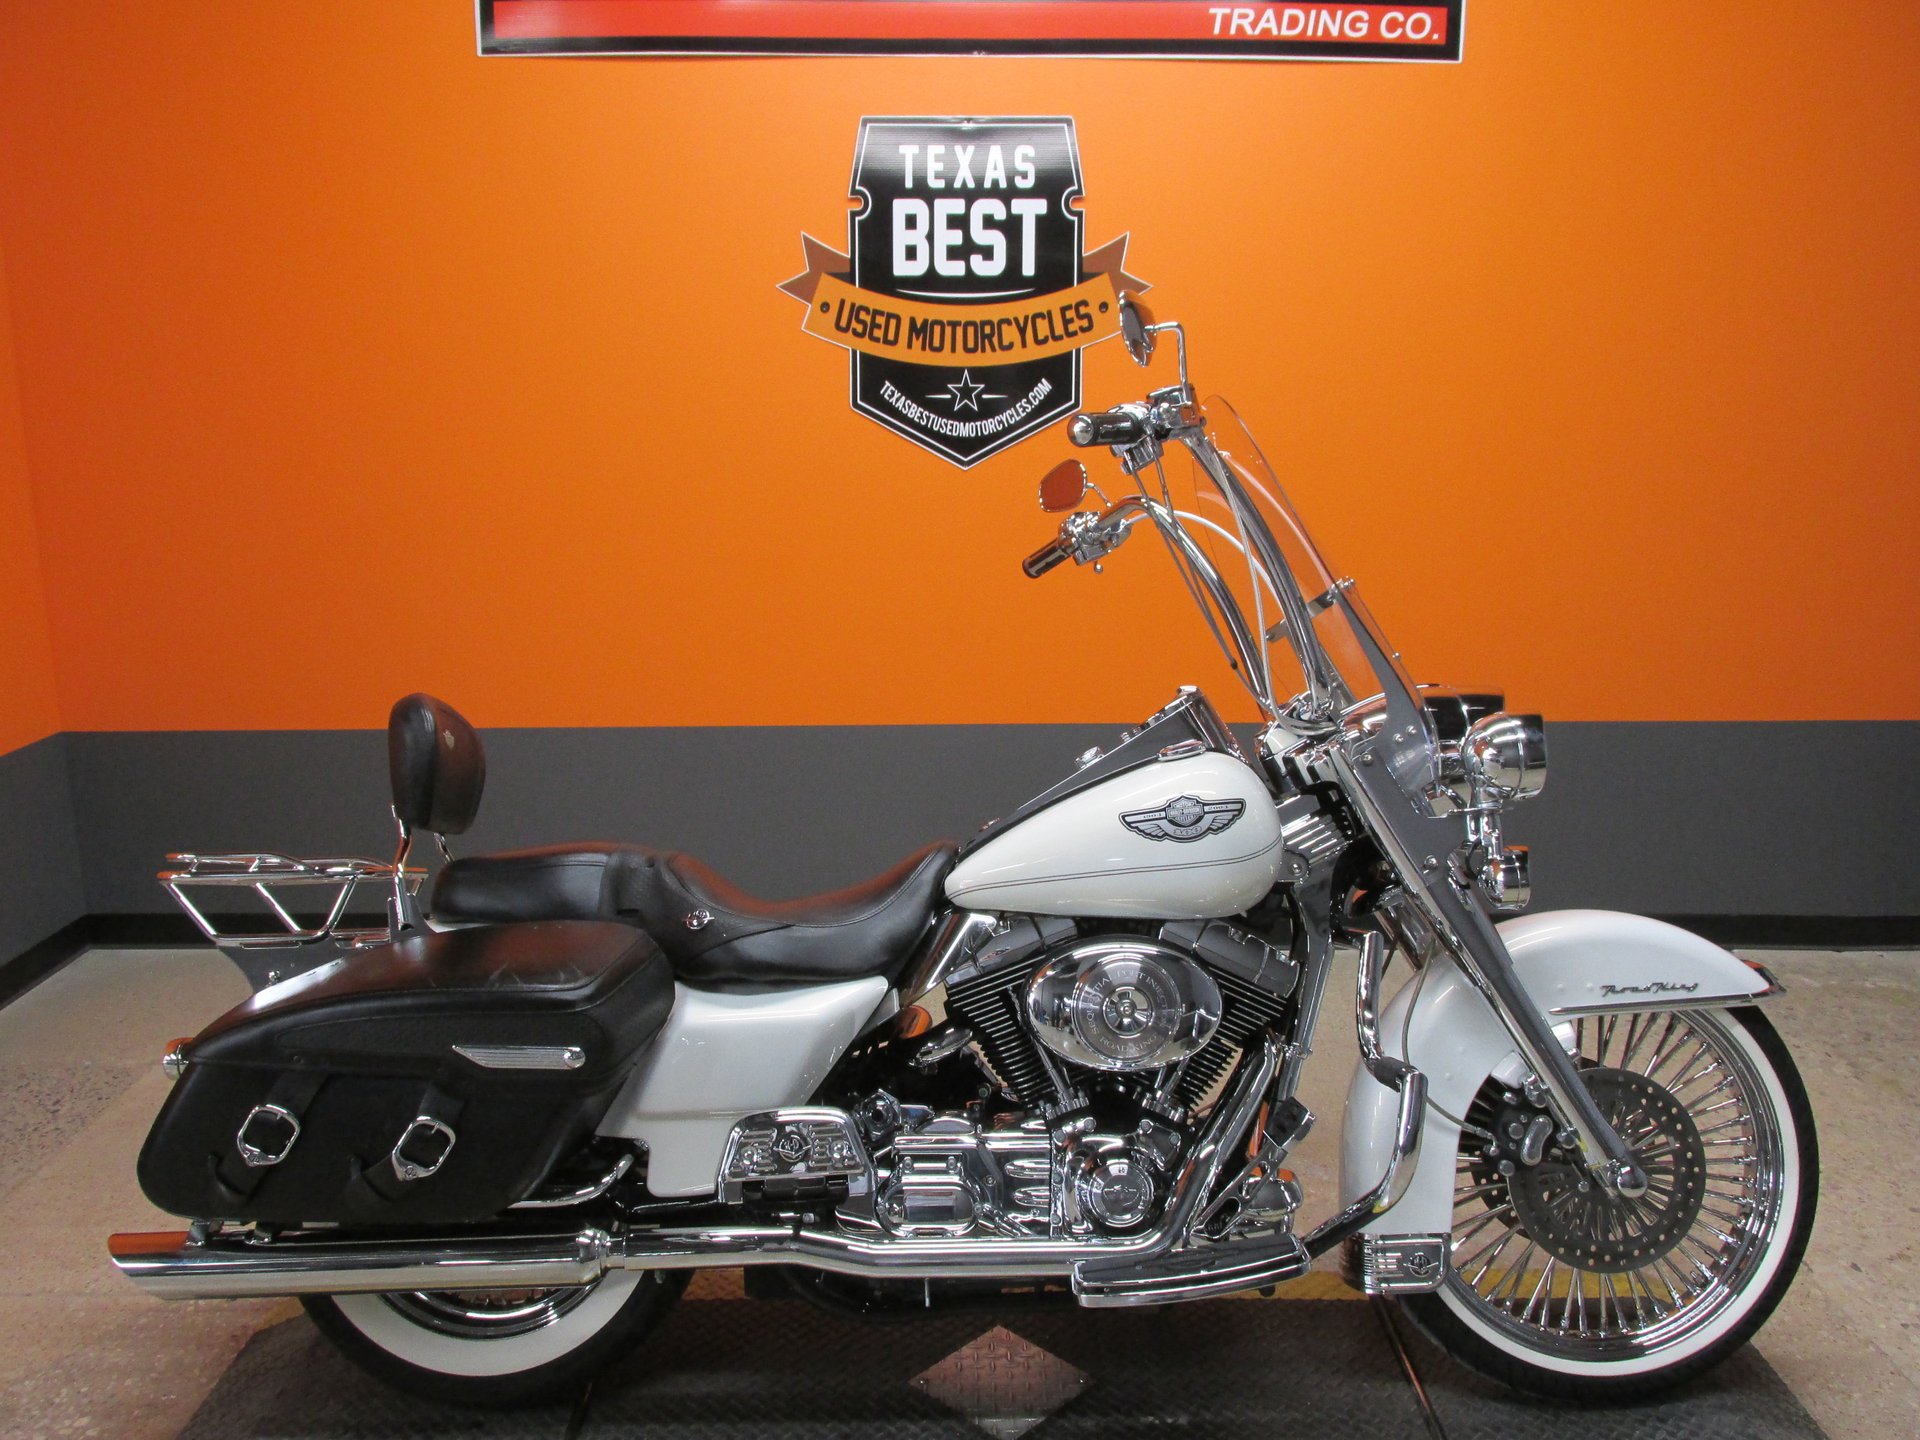 2003 Harley Davidson Road King American Motorcycle Trading Company Used Harley Davidson Motorcycles